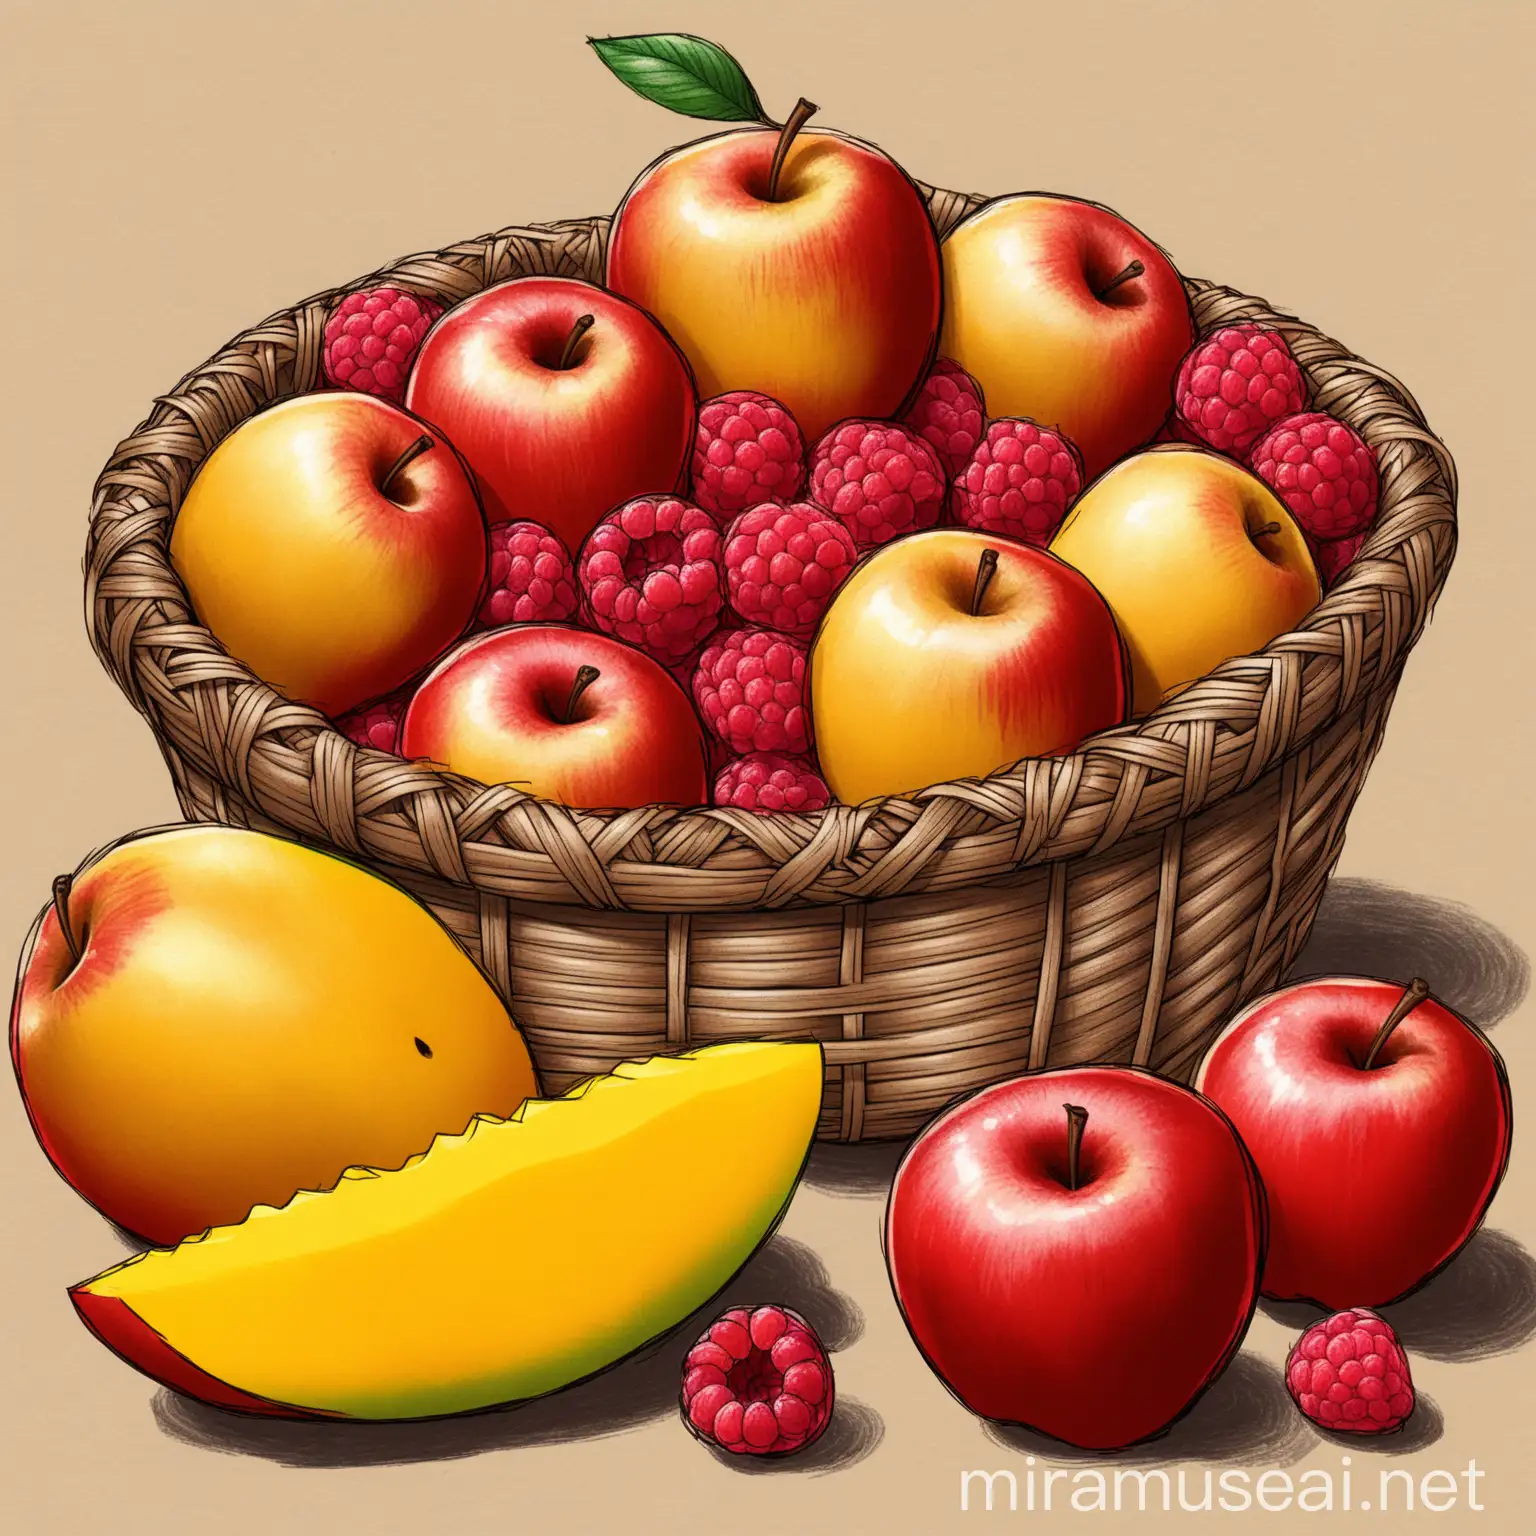 Fresh Fruit Basket Drawing Red Apples Raspberries and Mango Slices